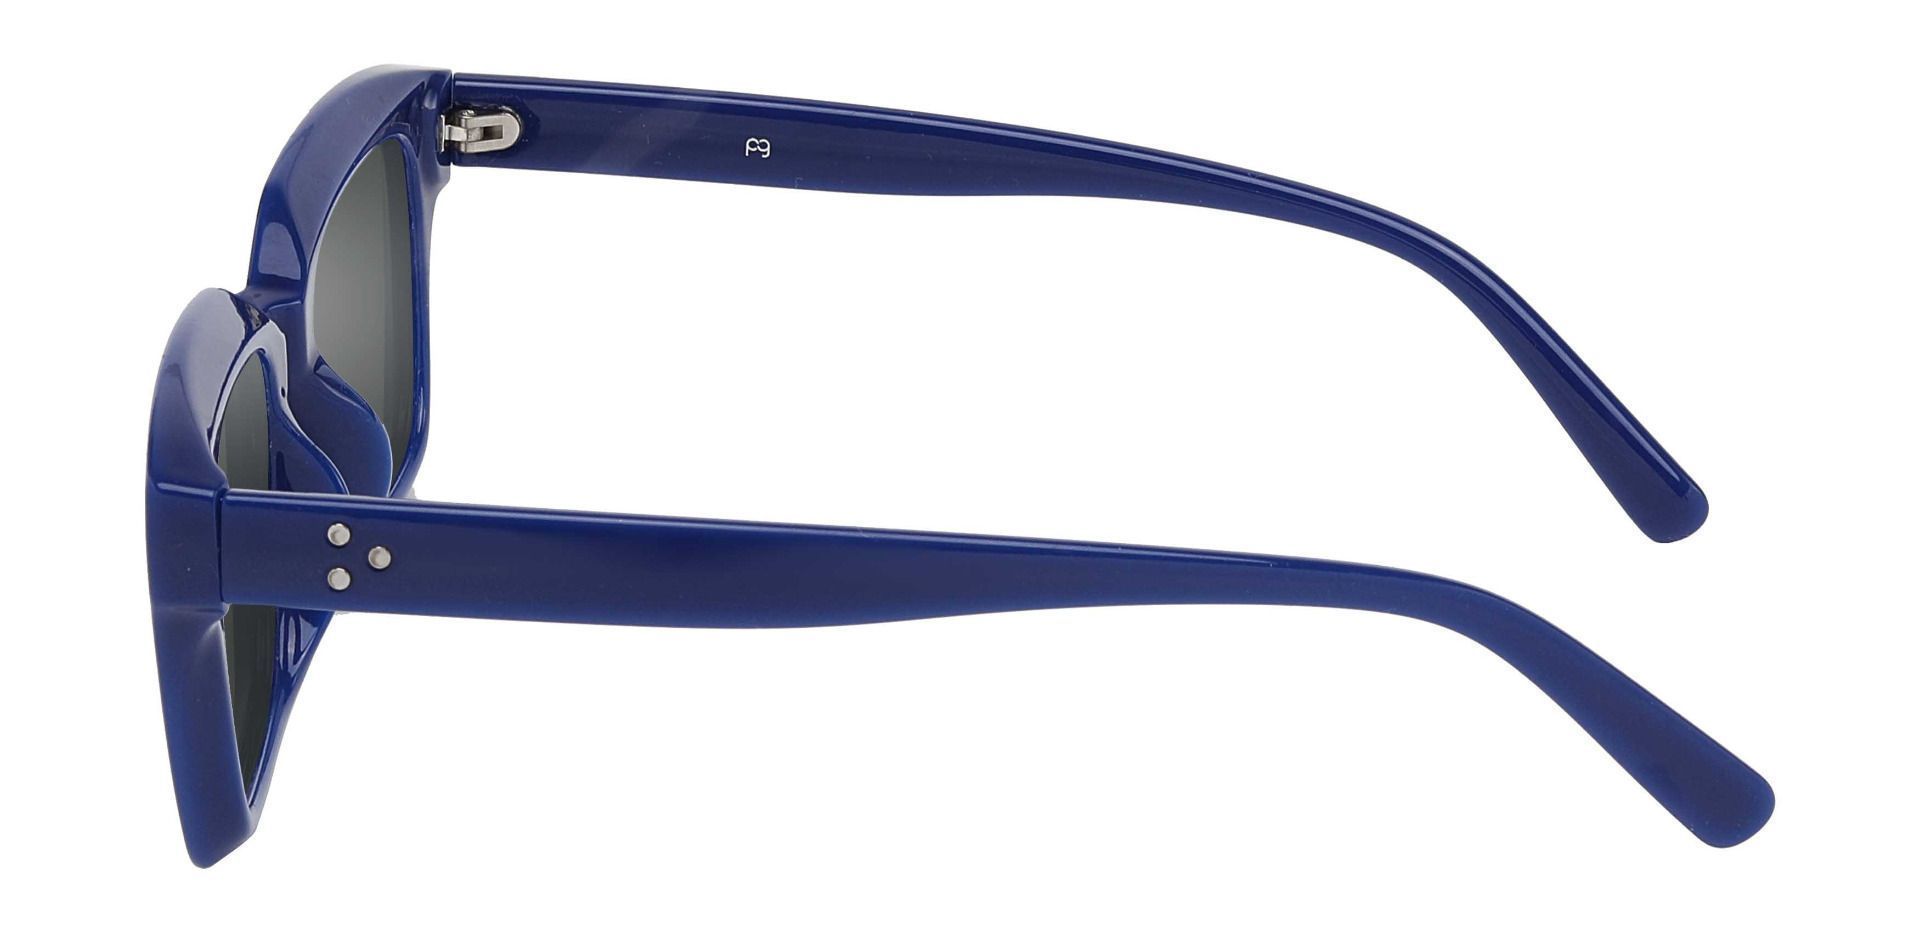 Unity Rectangle Progressive Sunglasses - Blue Frame With Gray Lenses